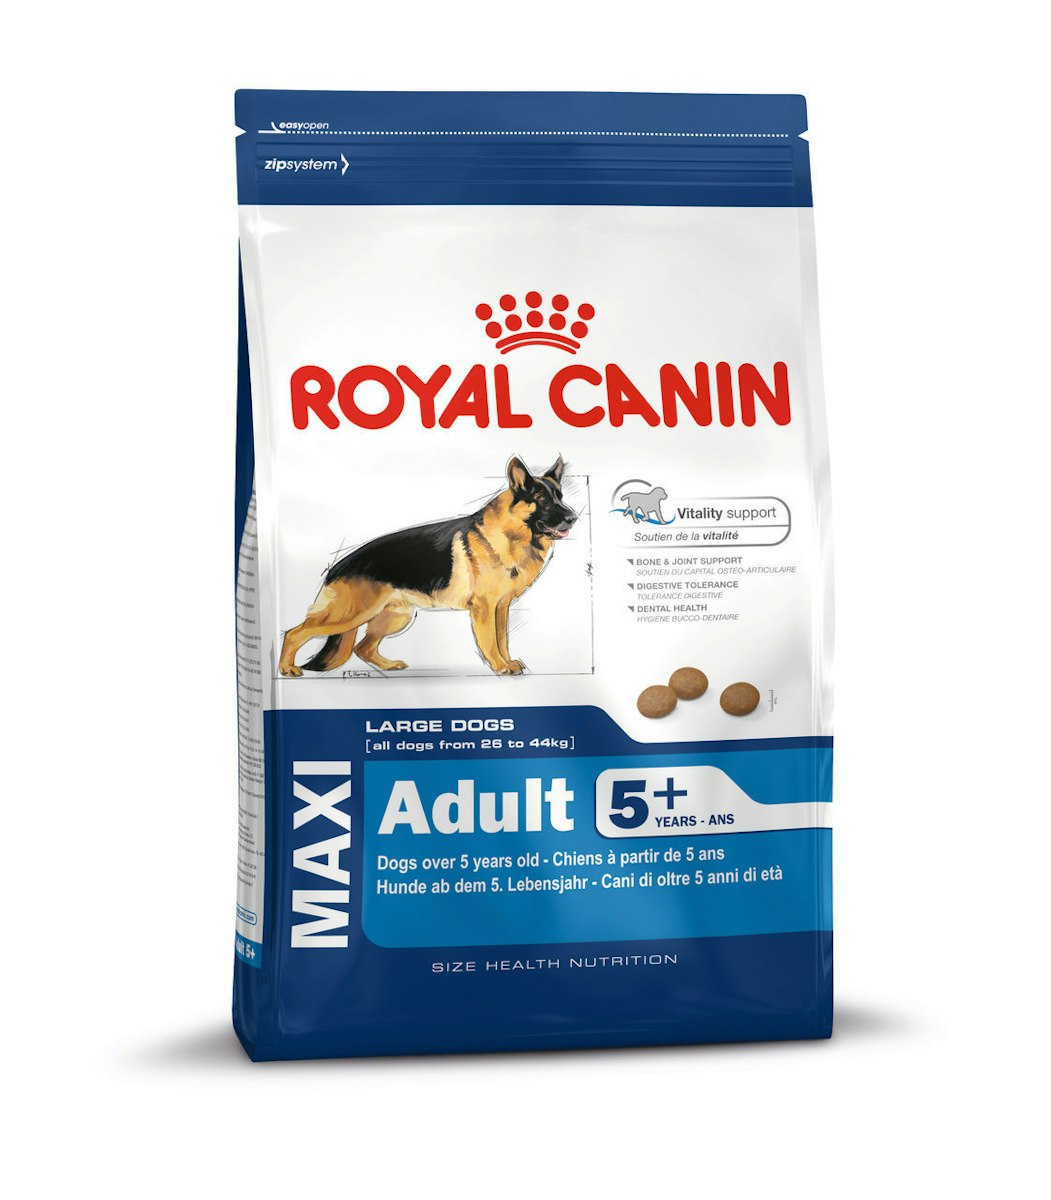 ROYAL CANIN SHN MAXI Adult (5+) Hundetrockenfutter von Royal Canin